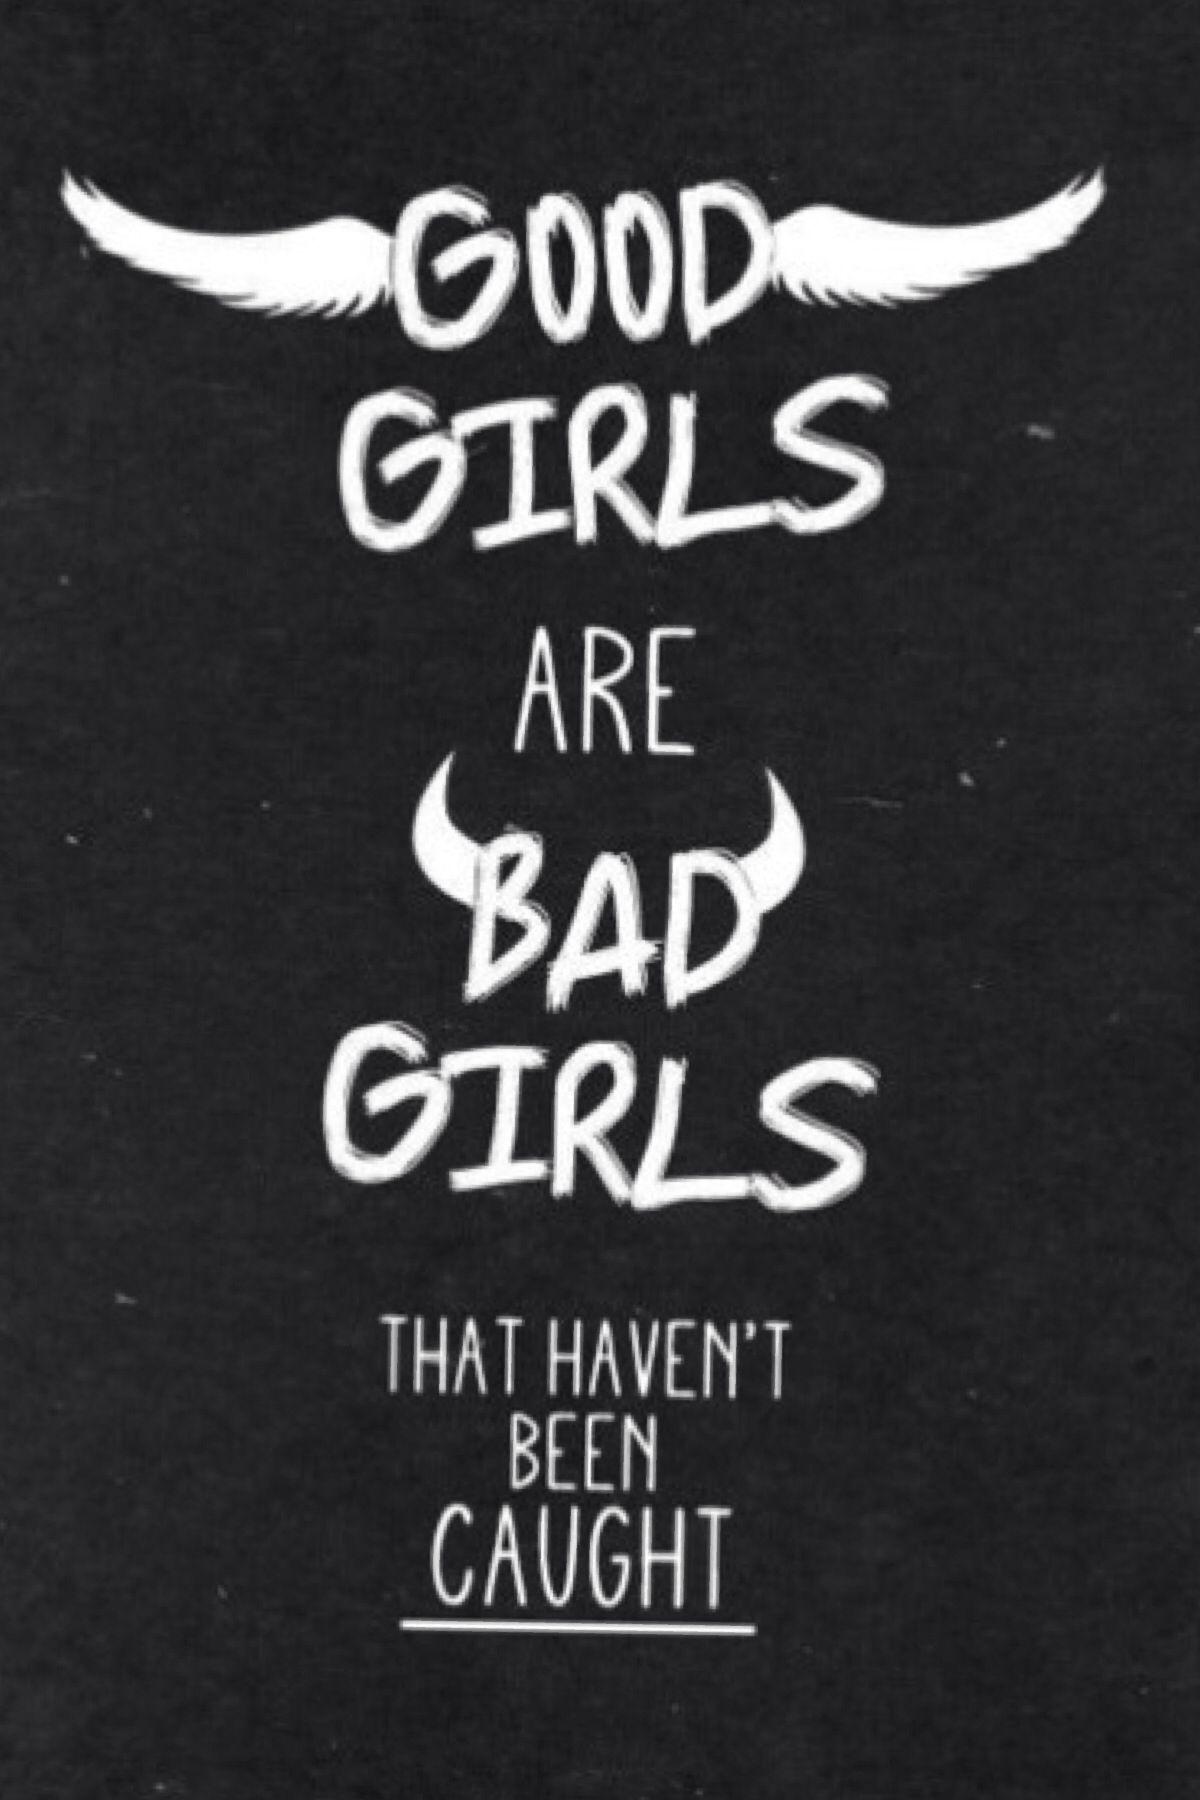 Good Girls Are Bad Girls. Quotes & Lyrics. Quotes, Wallpaper